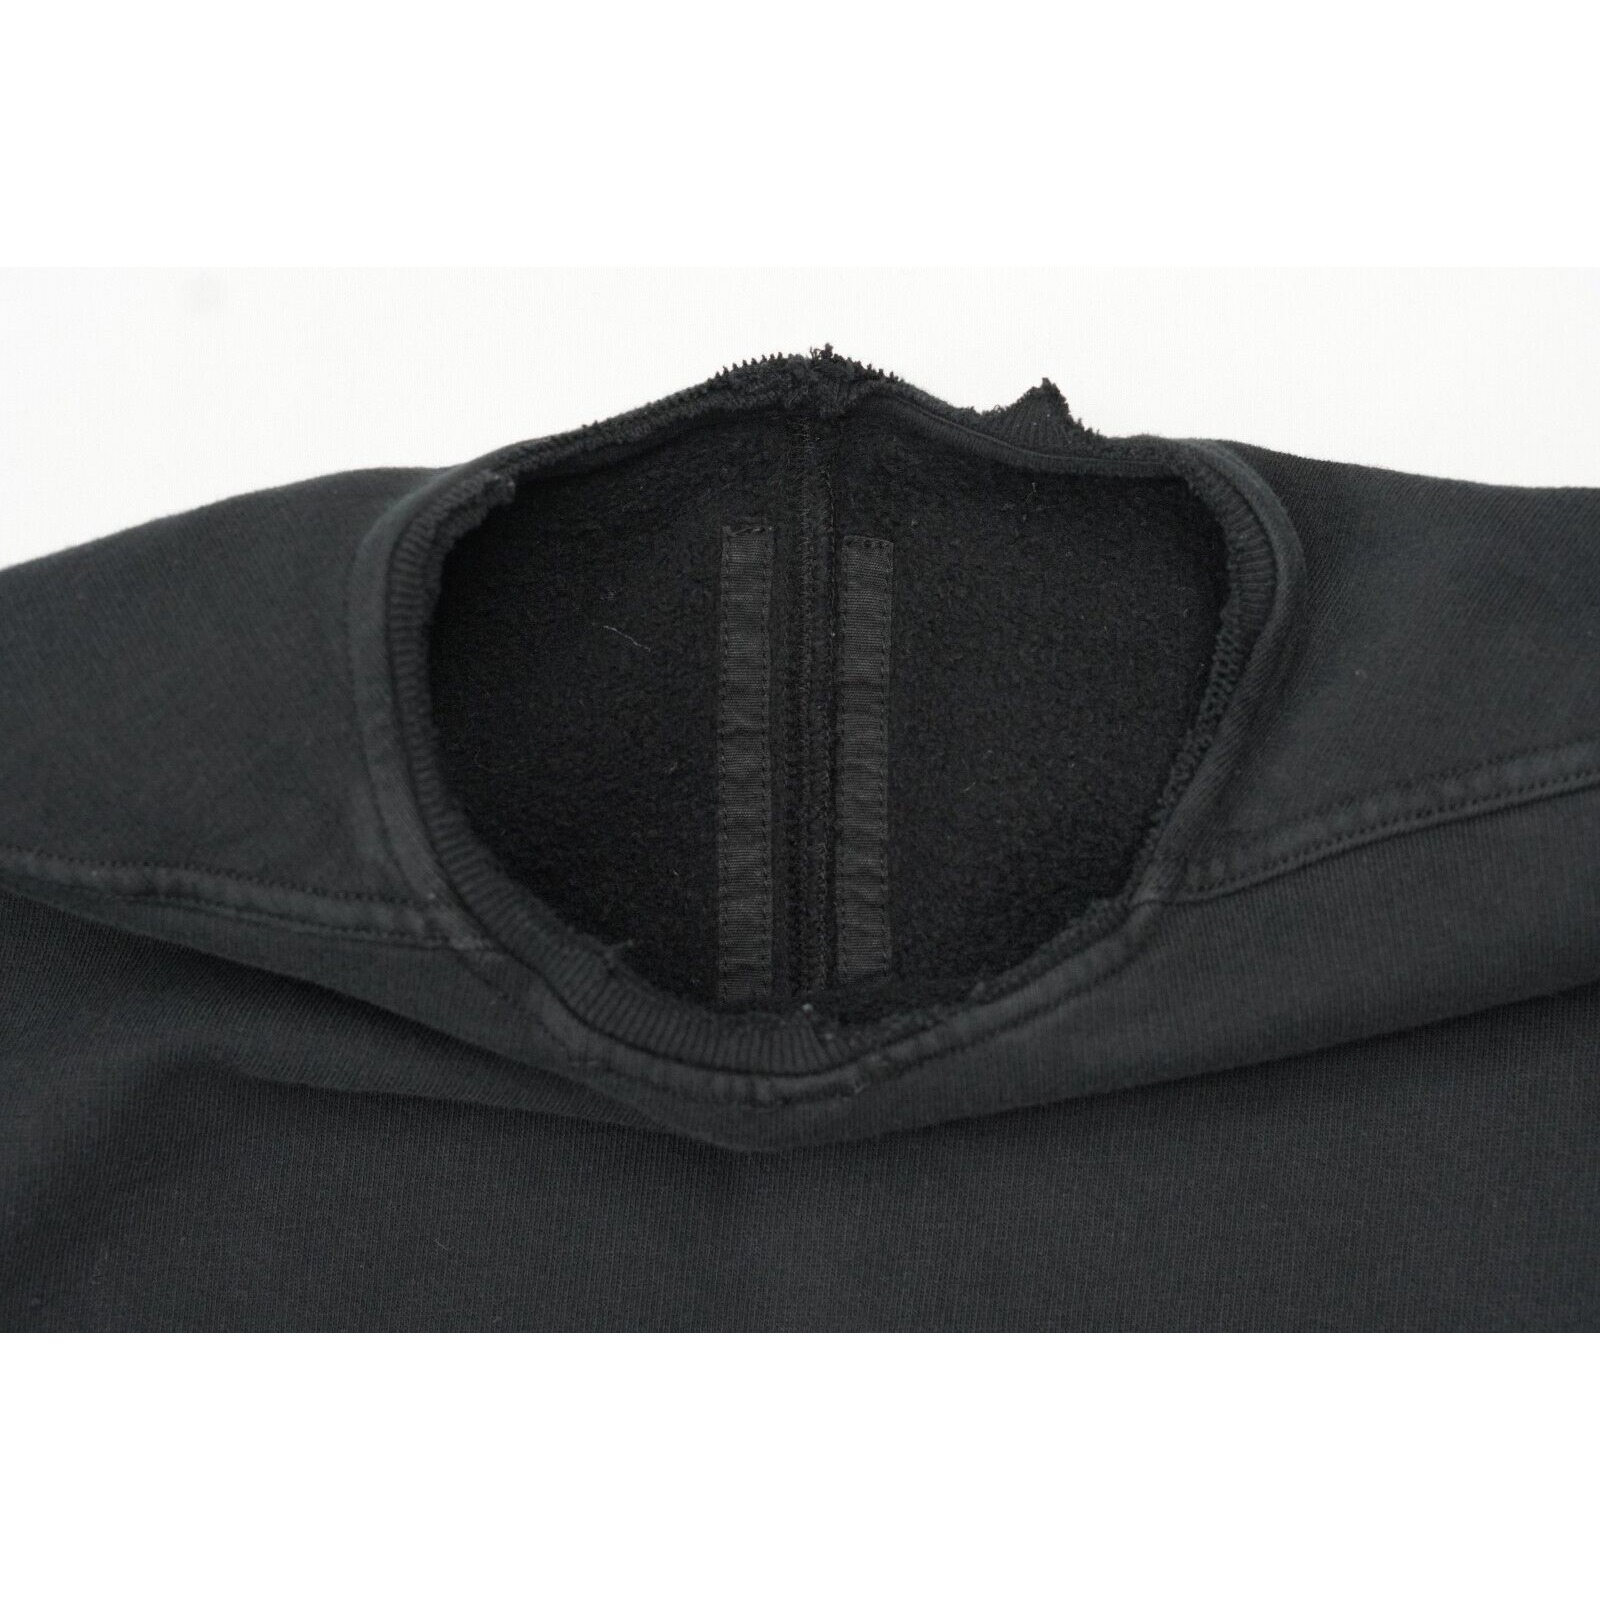 Jumbo Black Sleeveless Sweater Shirt Oversized SS16 Cyclops - 2